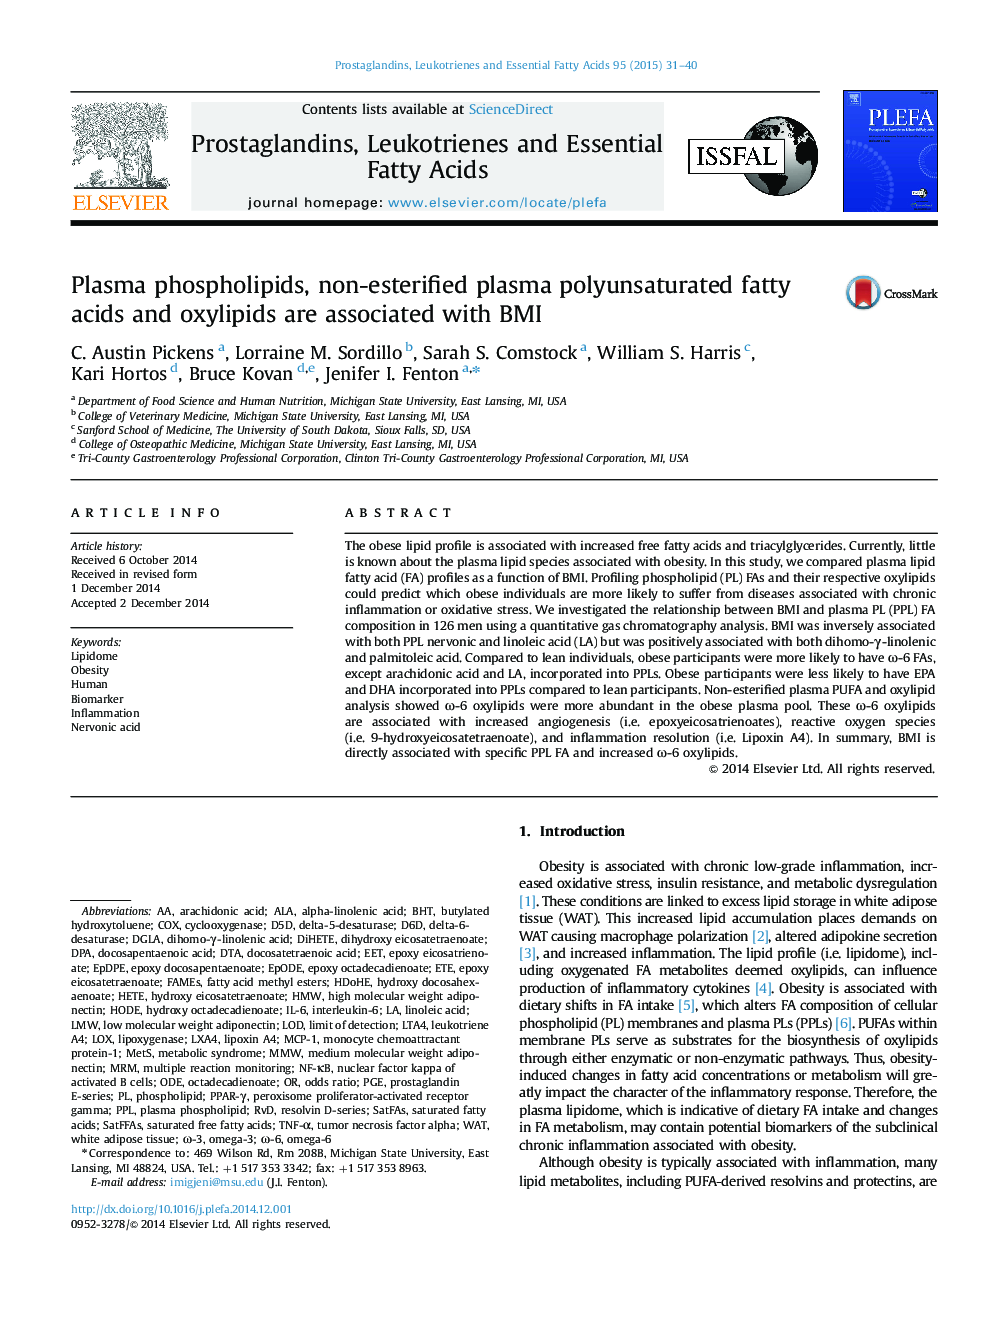 Plasma phospholipids, non-esterified plasma polyunsaturated fatty acids and oxylipids are associated with BMI